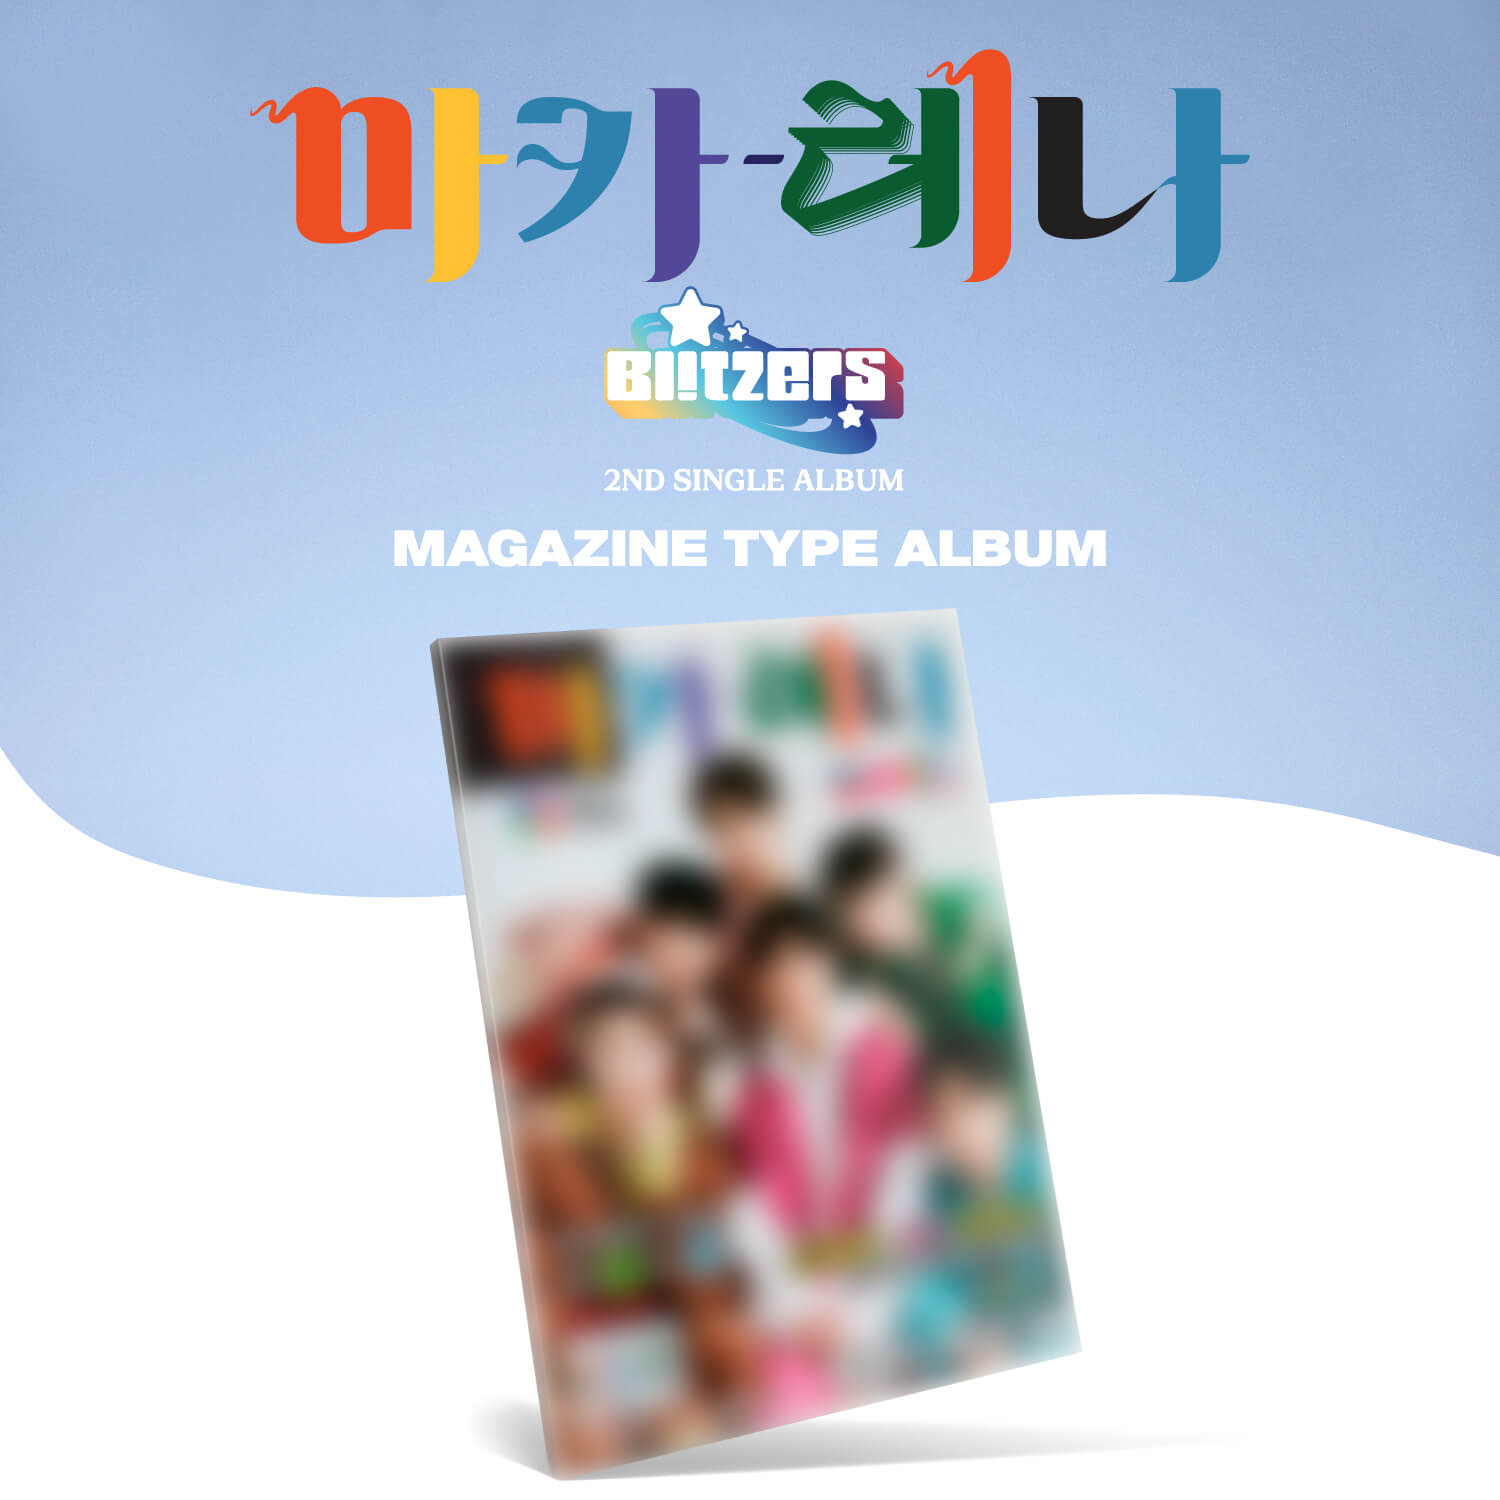 BLITZERS 2nd Single Album Macarena - Magazine Type Version